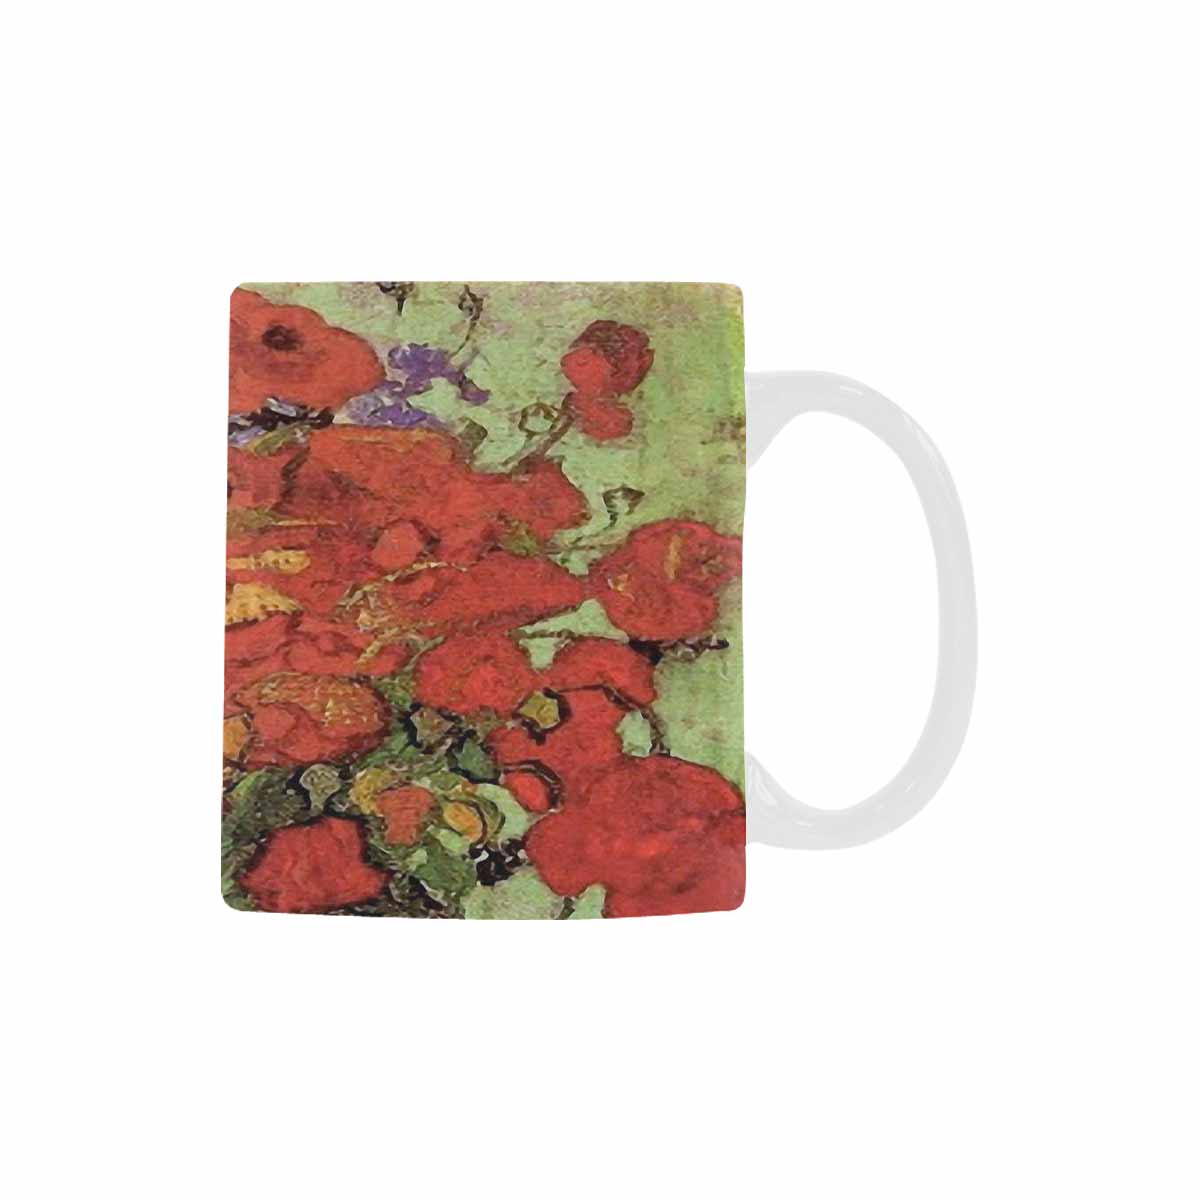 Vintage floral coffee mug or tea cup, Design 47